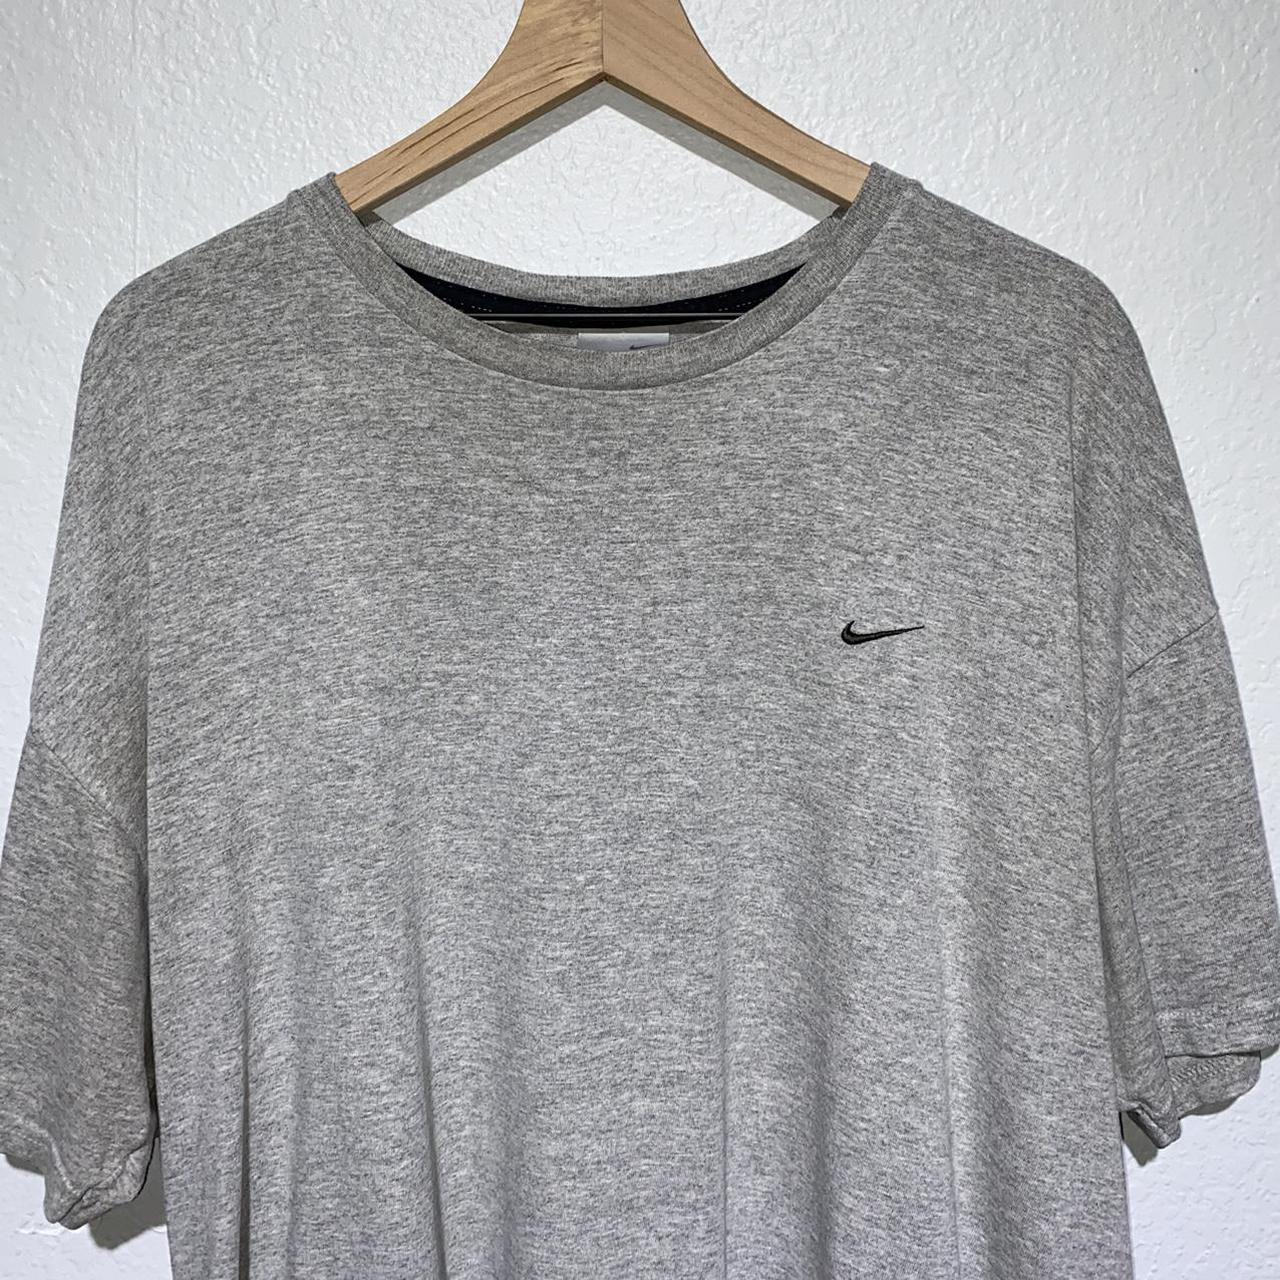 Nike Men's Grey T-shirt (2)